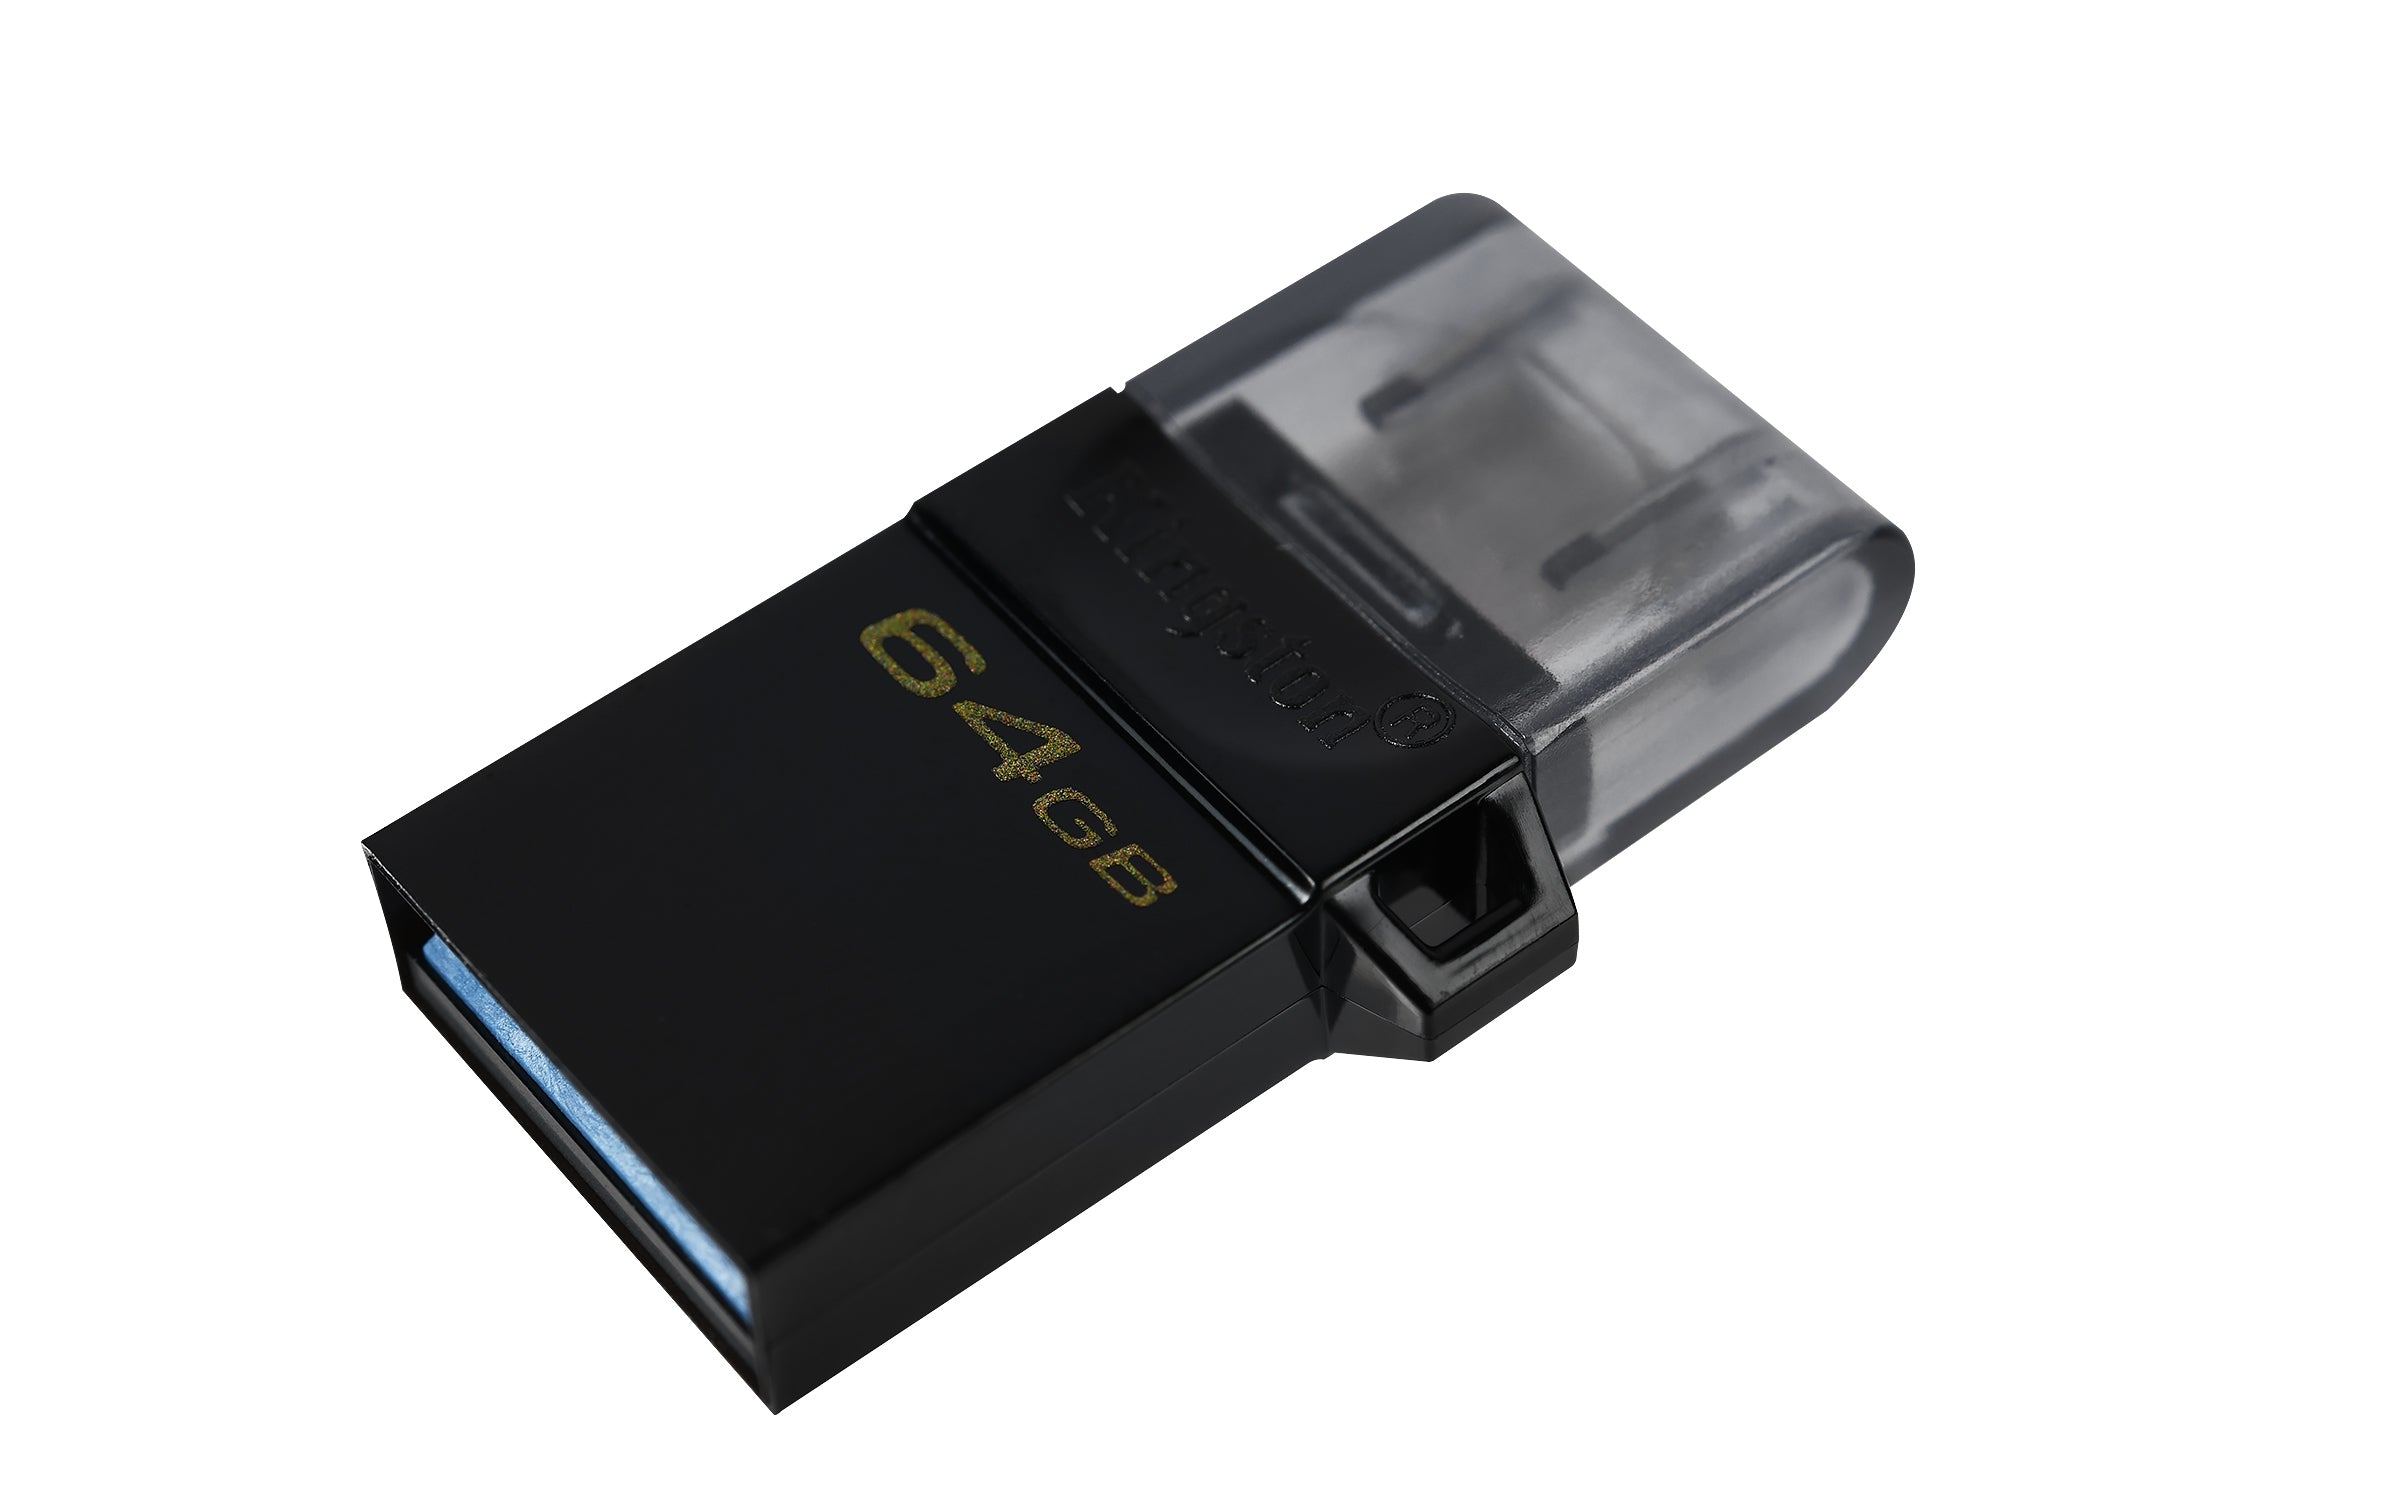 Memoria Flash Kingston 64Gb Microduo 3 Gen2 Usb 3.2 (Dtduo3G2/64Gb)